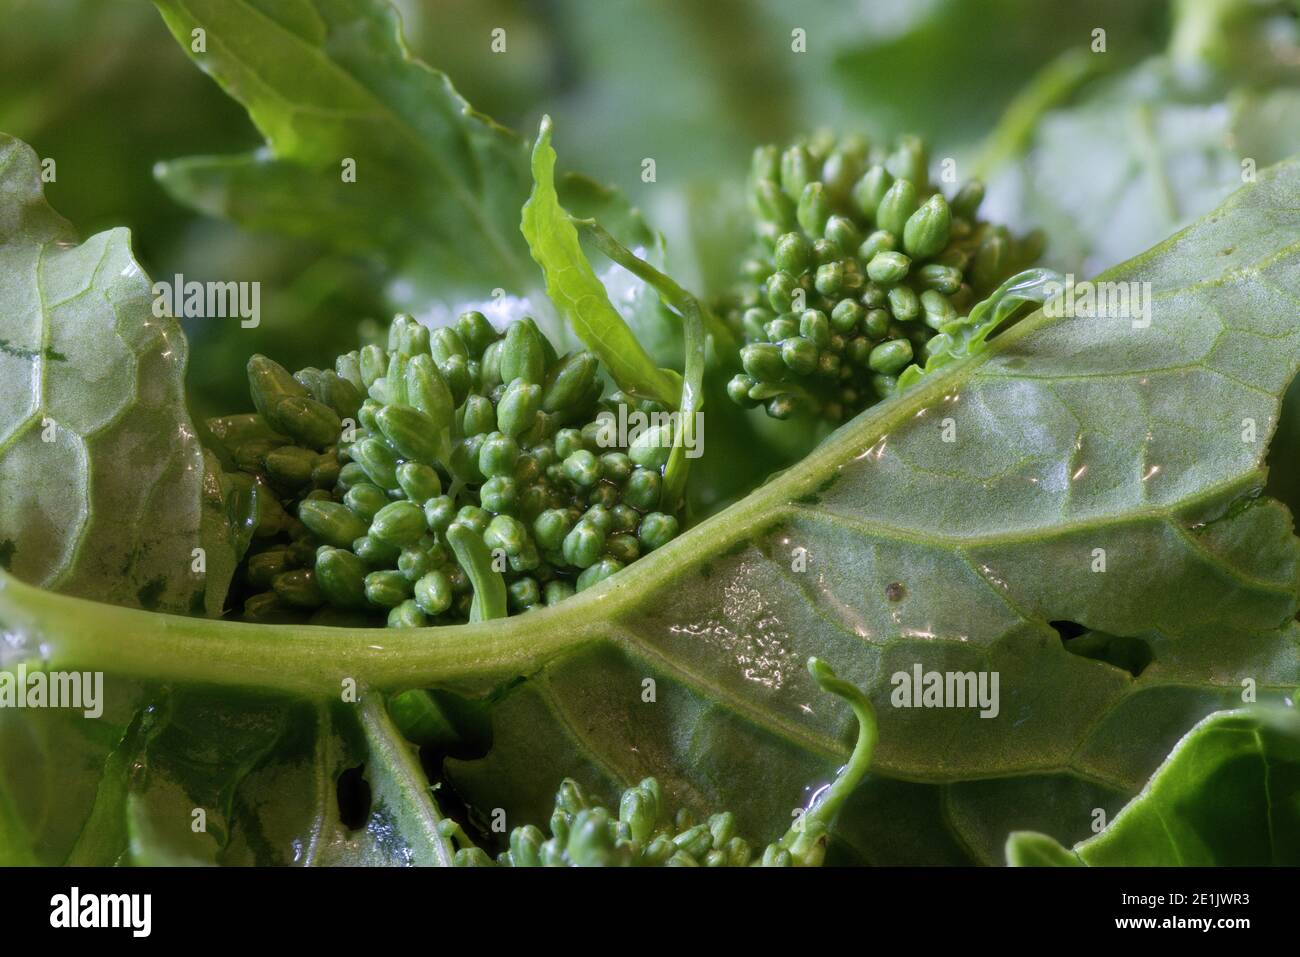 turnip greens close up Stock Photo